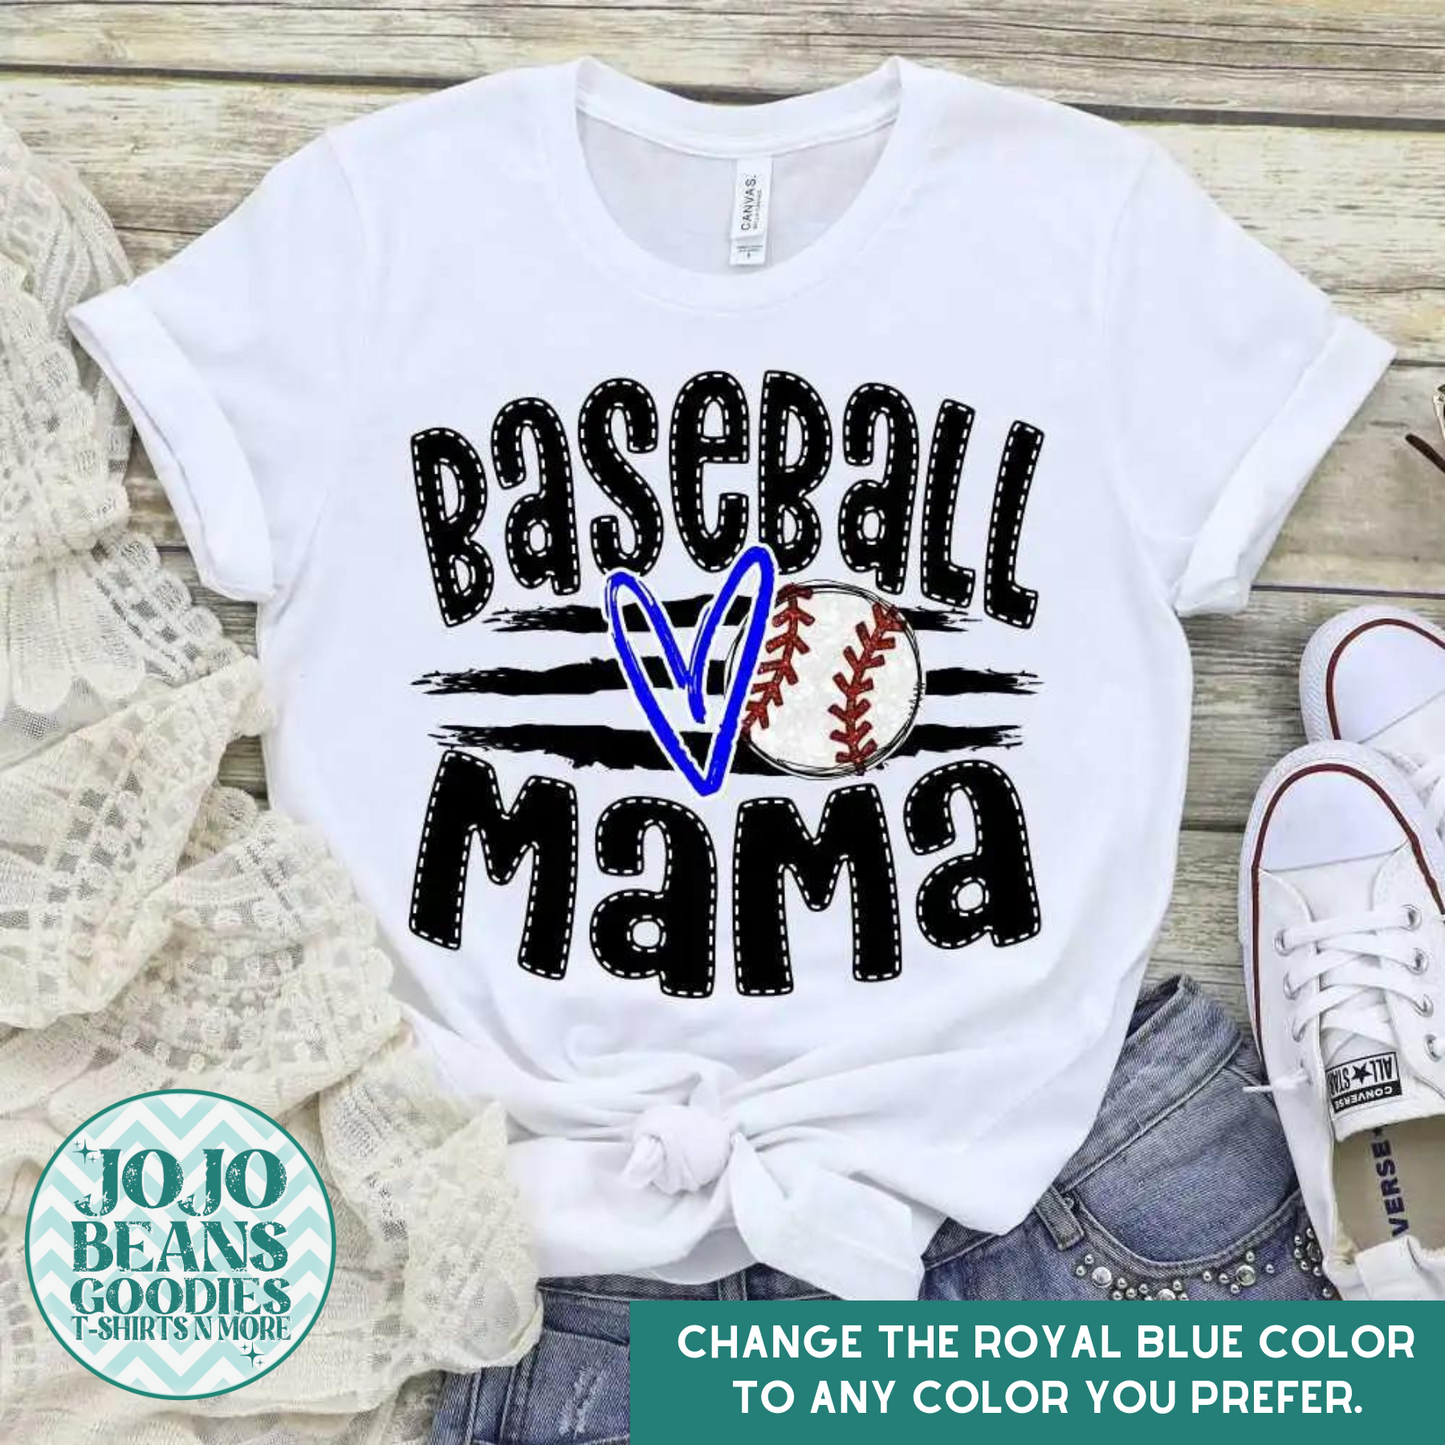 Baseball Mama - Ball & Stripes - Customize